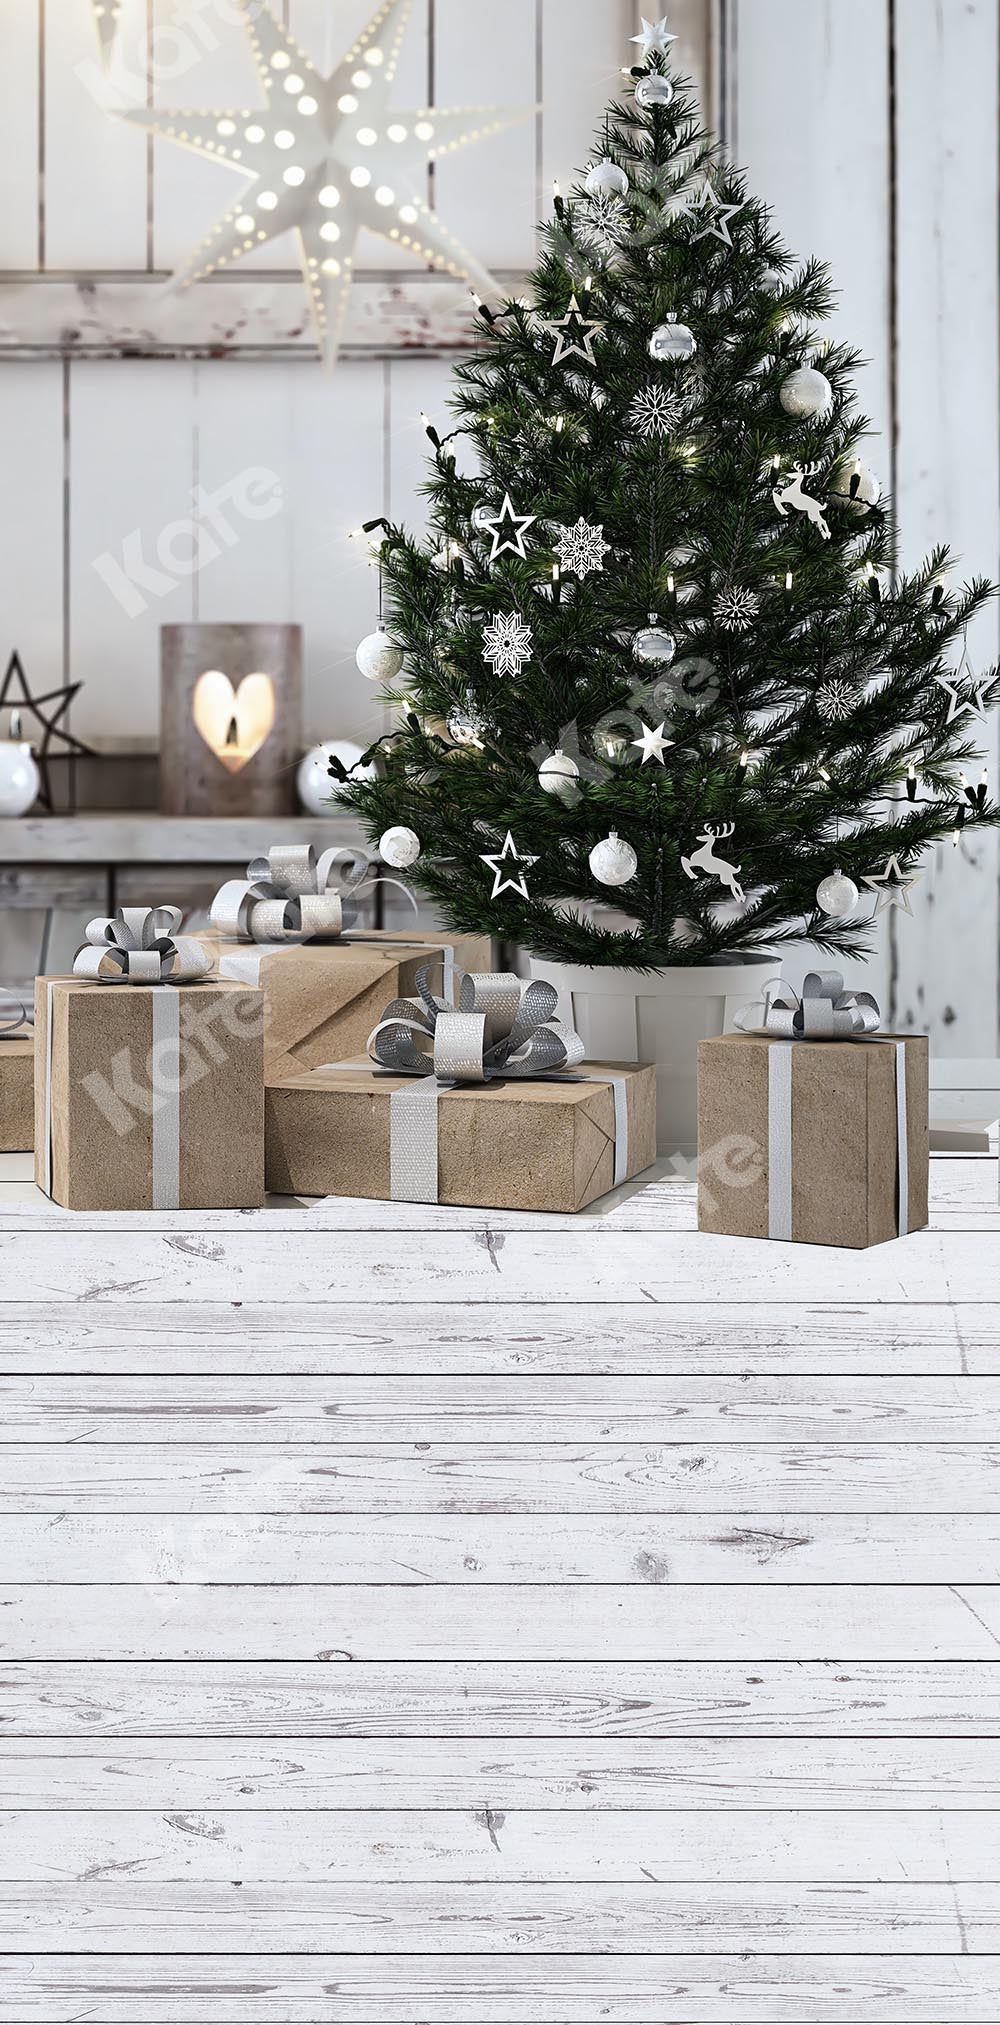 Kate Fondo de piso de madera de árbol de Navidad de barrido diseñado por Chain Photography